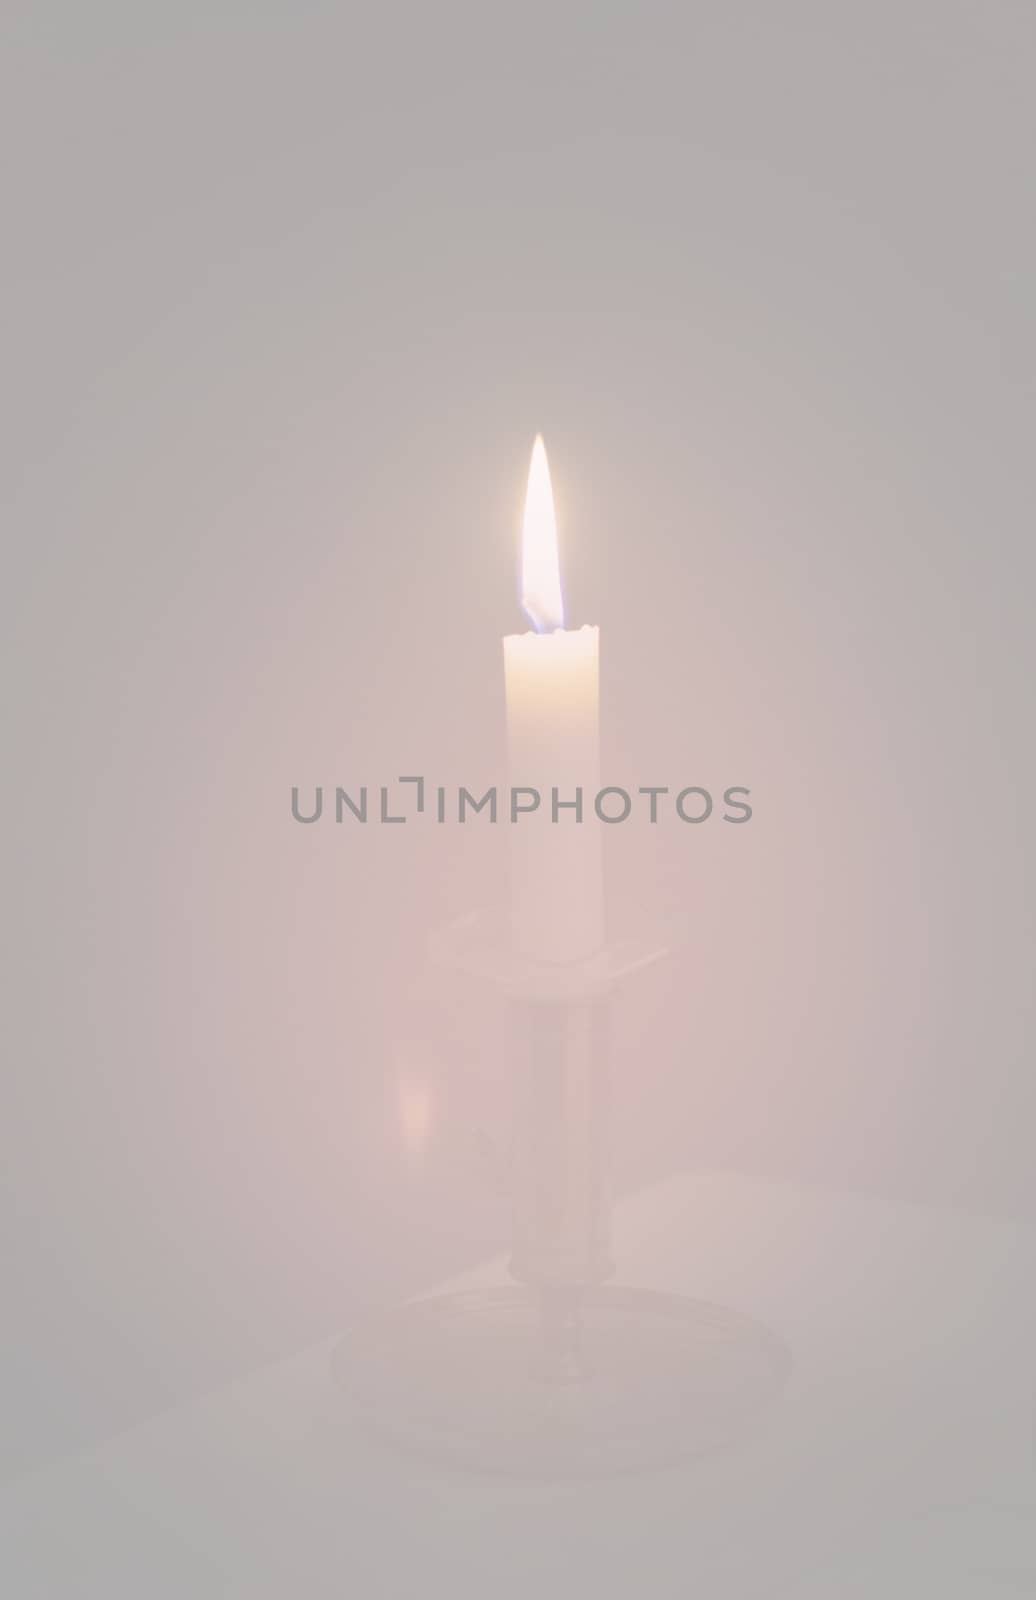 Simple candle burning in dark haze, various concepts of darkness to light, prayer symbolism, illumination, awakening and more.